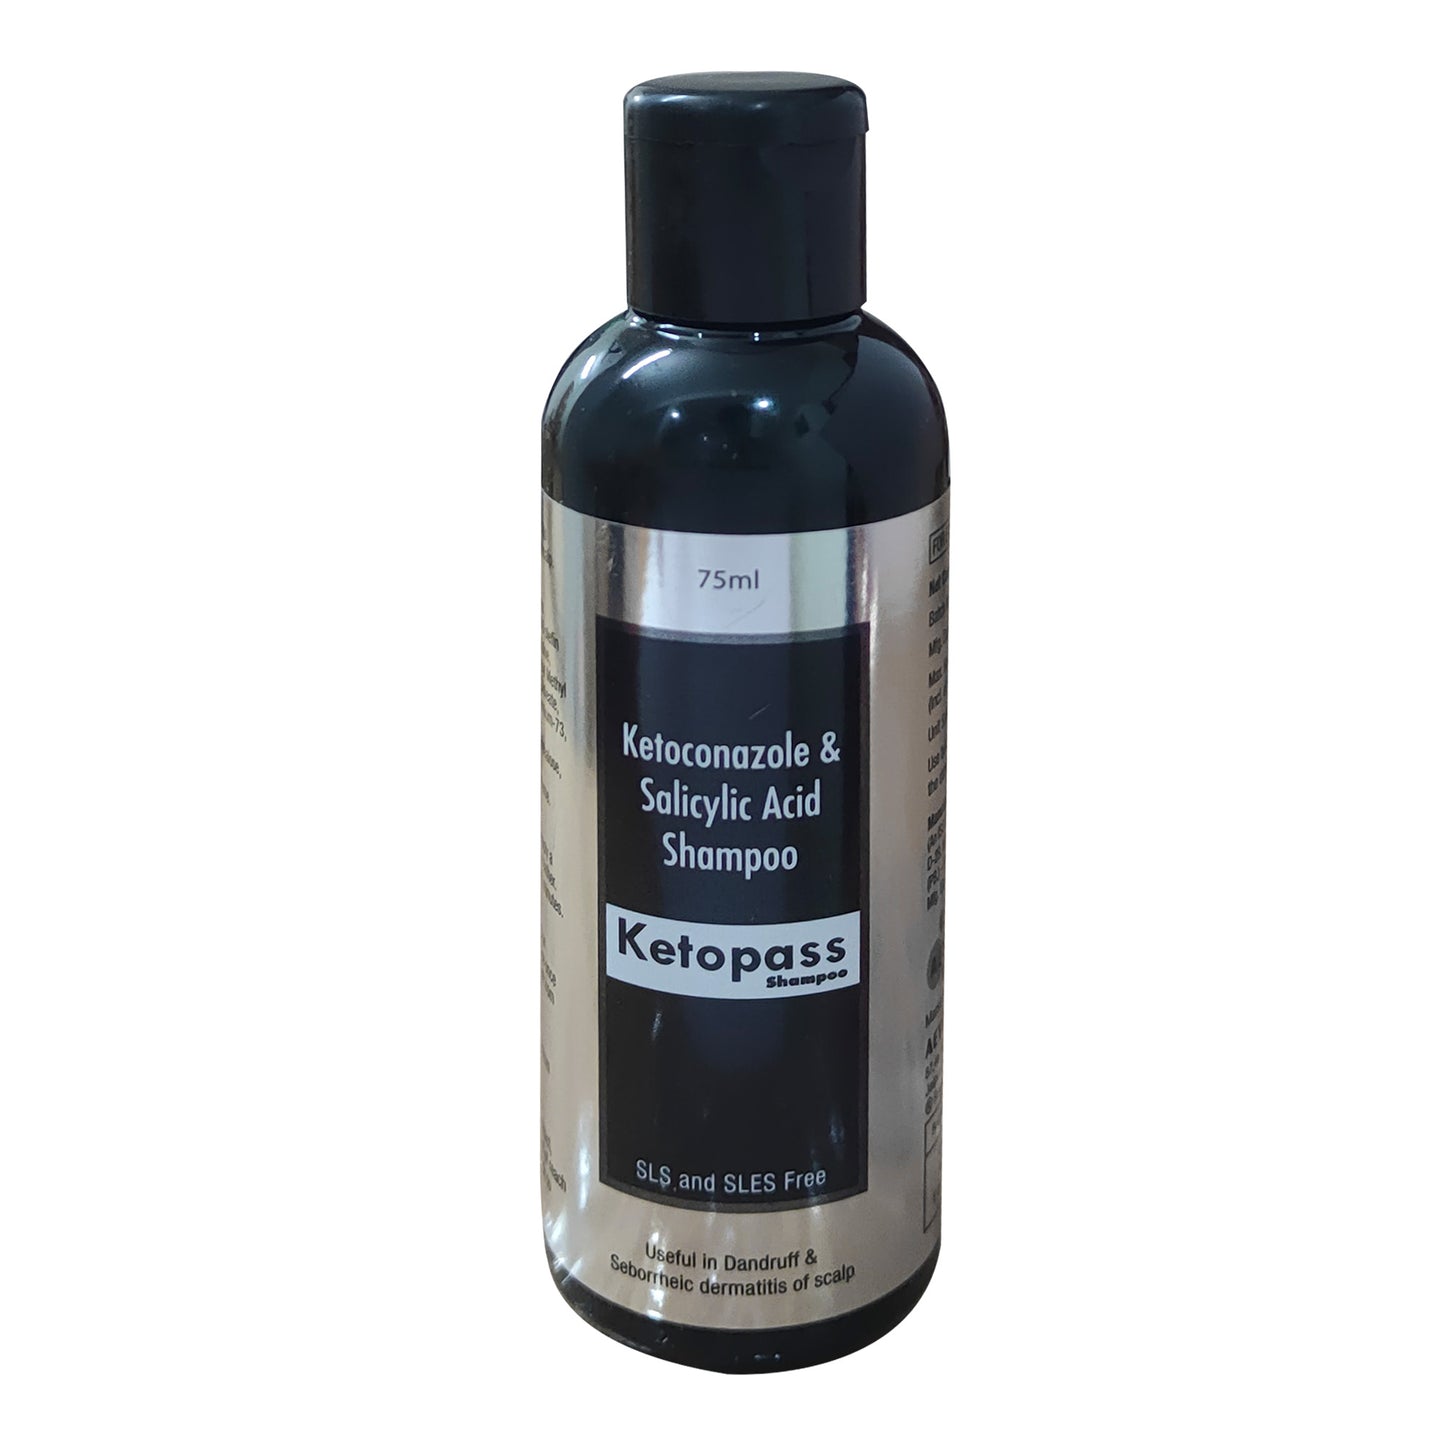 Ketopass - Anti Dandruff Shampoo (Ketoconazole & Salicylic Acid) | For Dry Itchy Scaly & Flaky Scalp Minimizes Dandruff And Dry Scalp Conditions